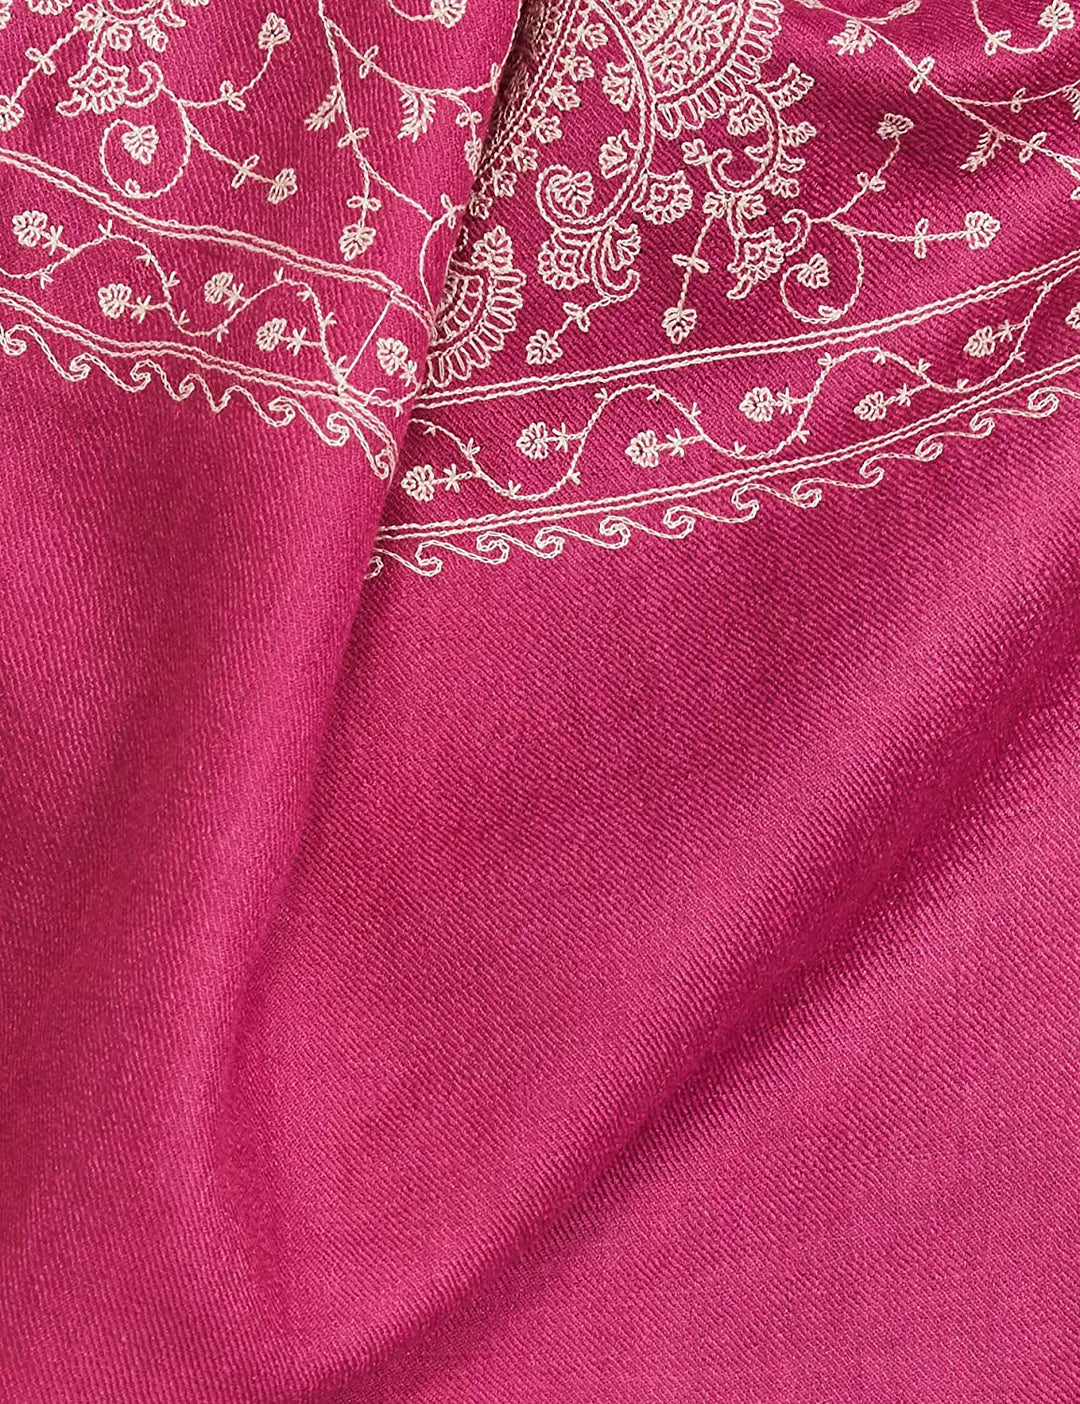 Pashtush India 100x200 Pashtush Womens Shawl With Tone On Tone Embroidery, Soft And Warm, Light Weight, Fuchsia